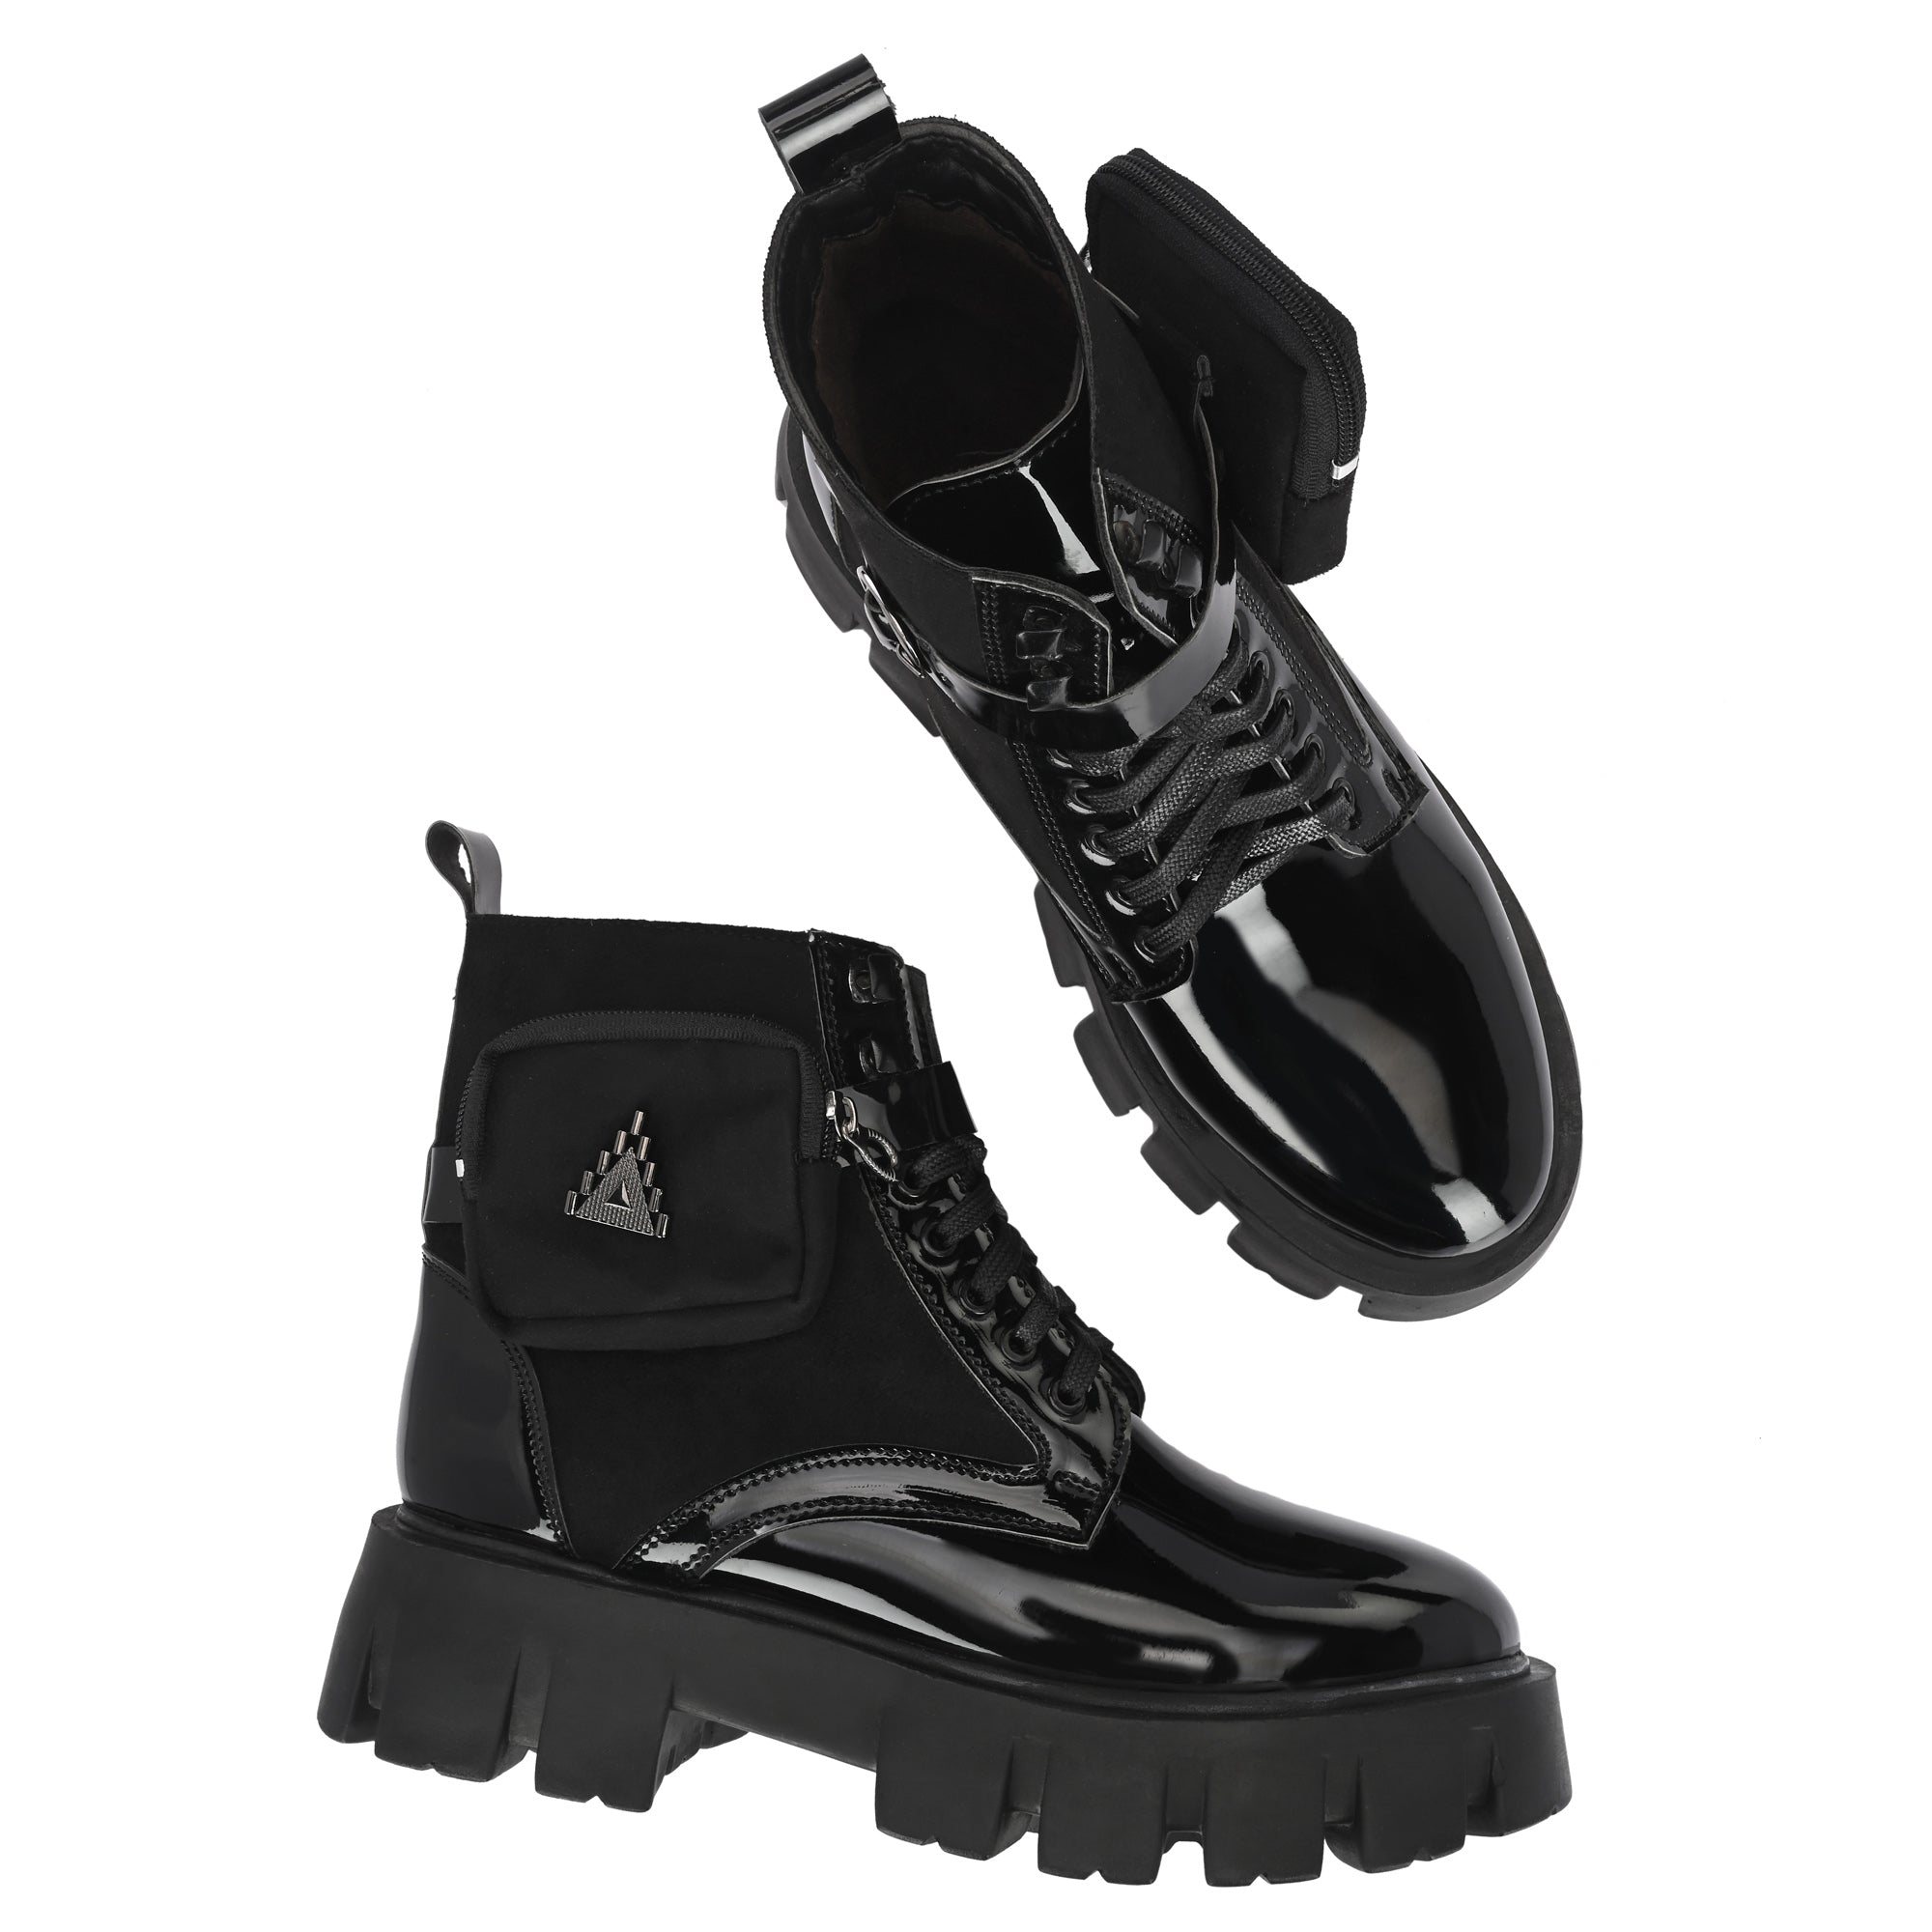 attitudist-black-velvet-upper-high-heel-pocket-boots-for-men